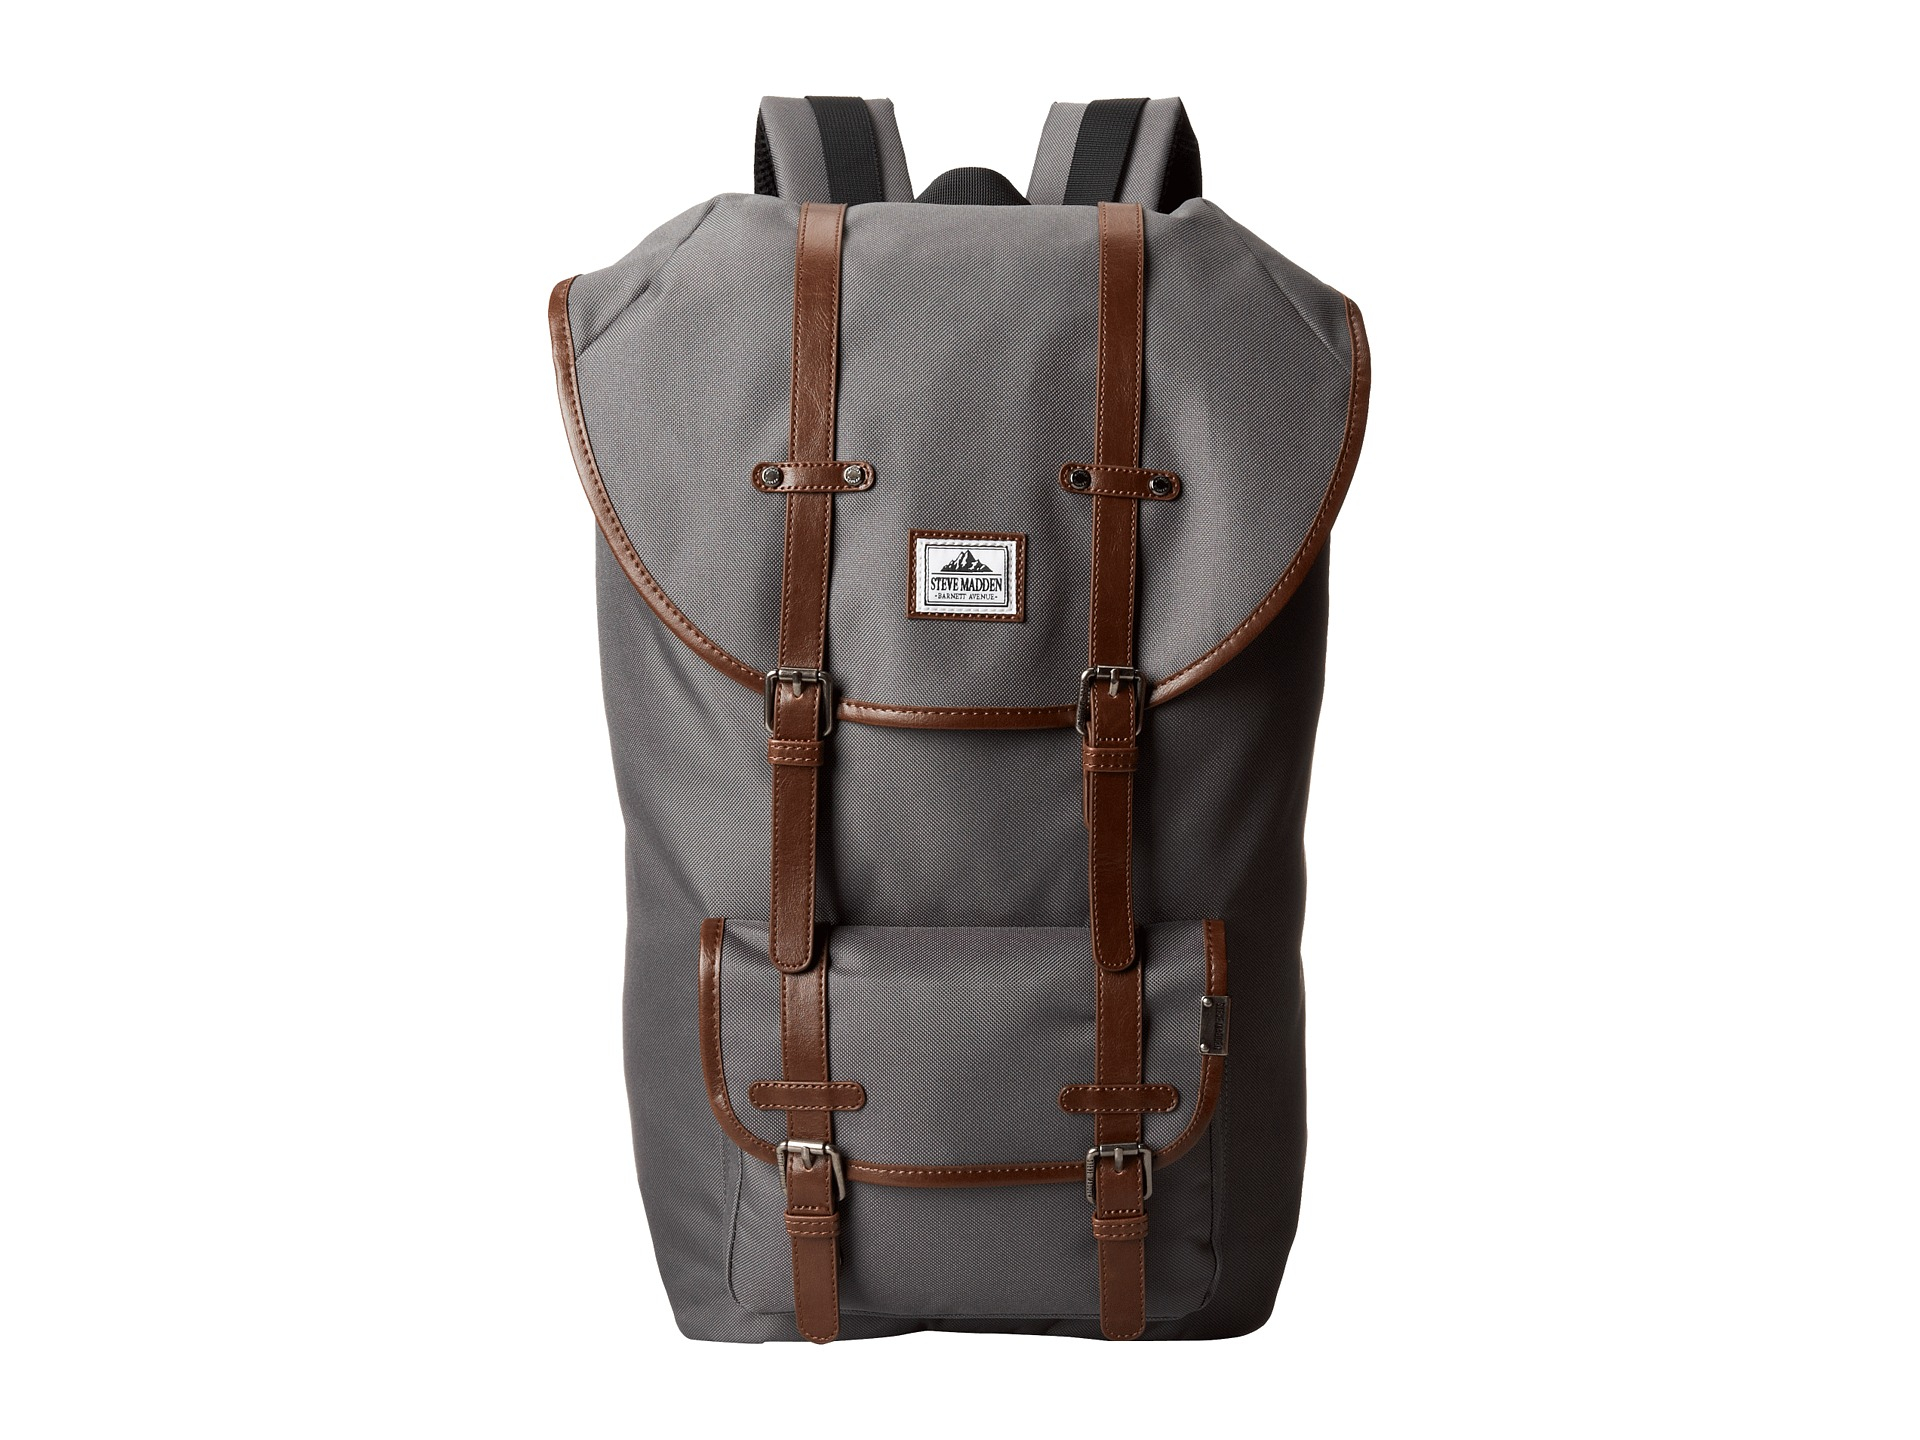 Steve Madden Sport Utility Backpack in Grey (Gray) - Lyst